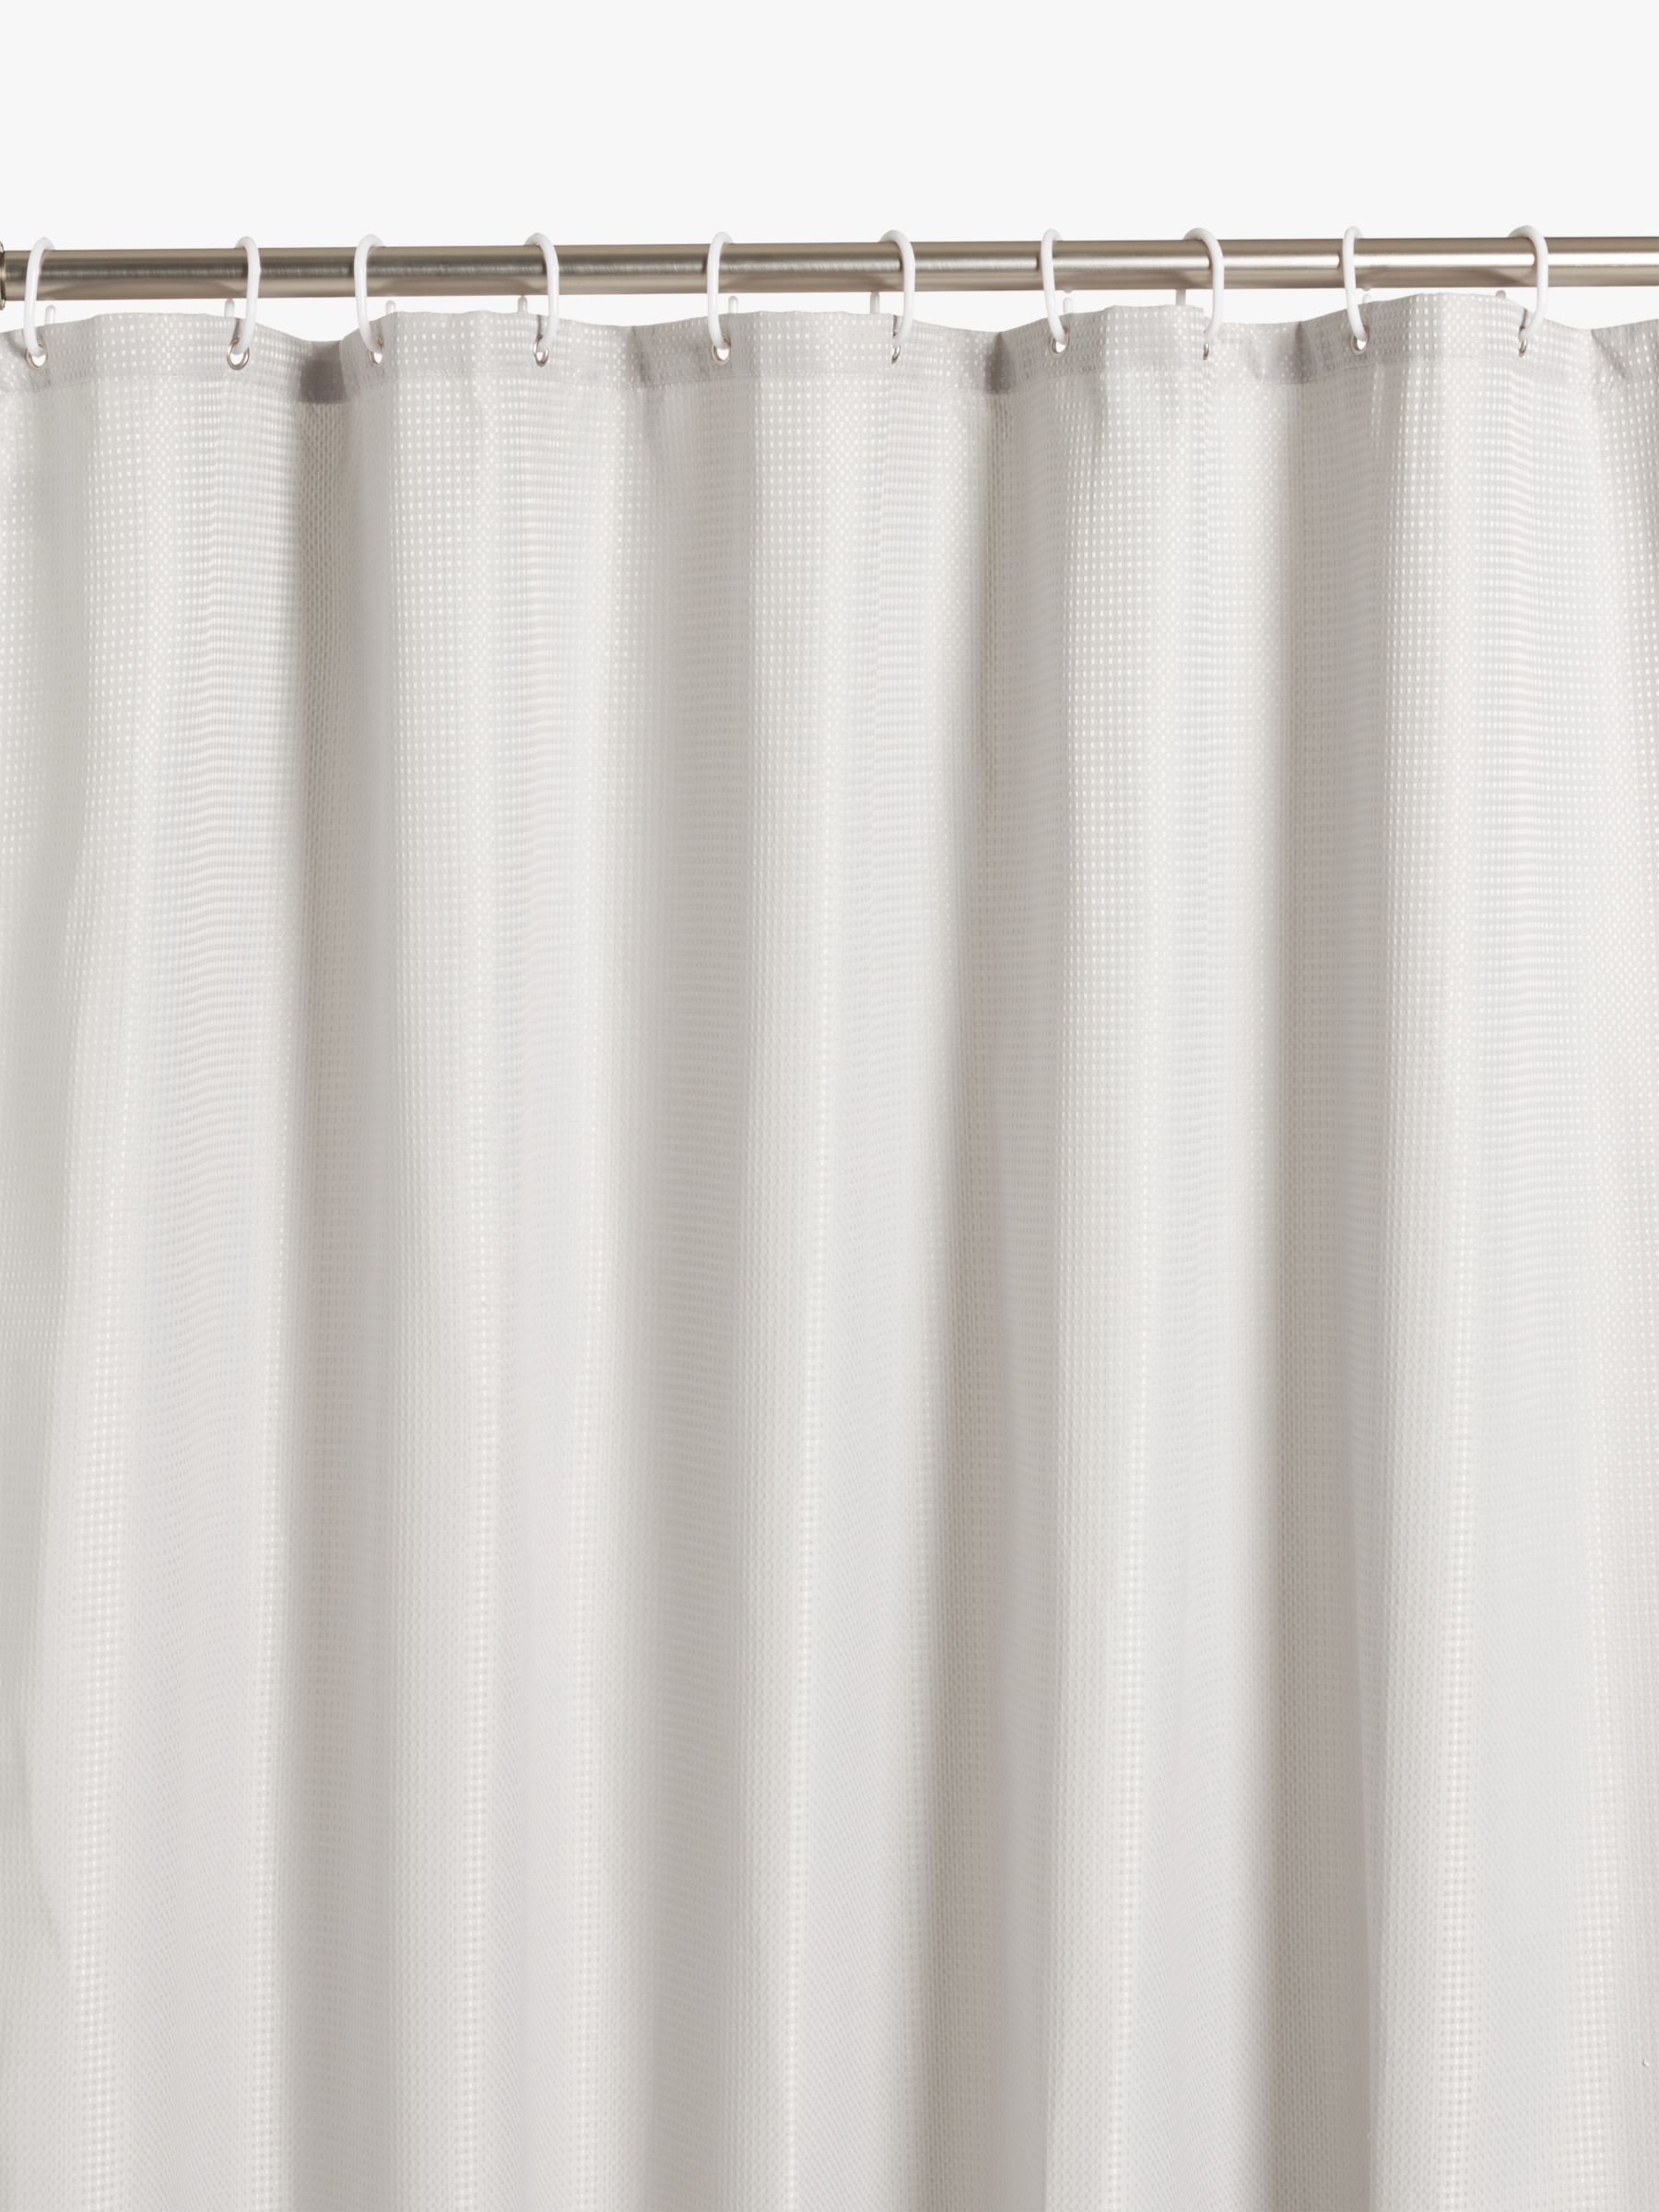 Mildew Resistant Shower Curtain